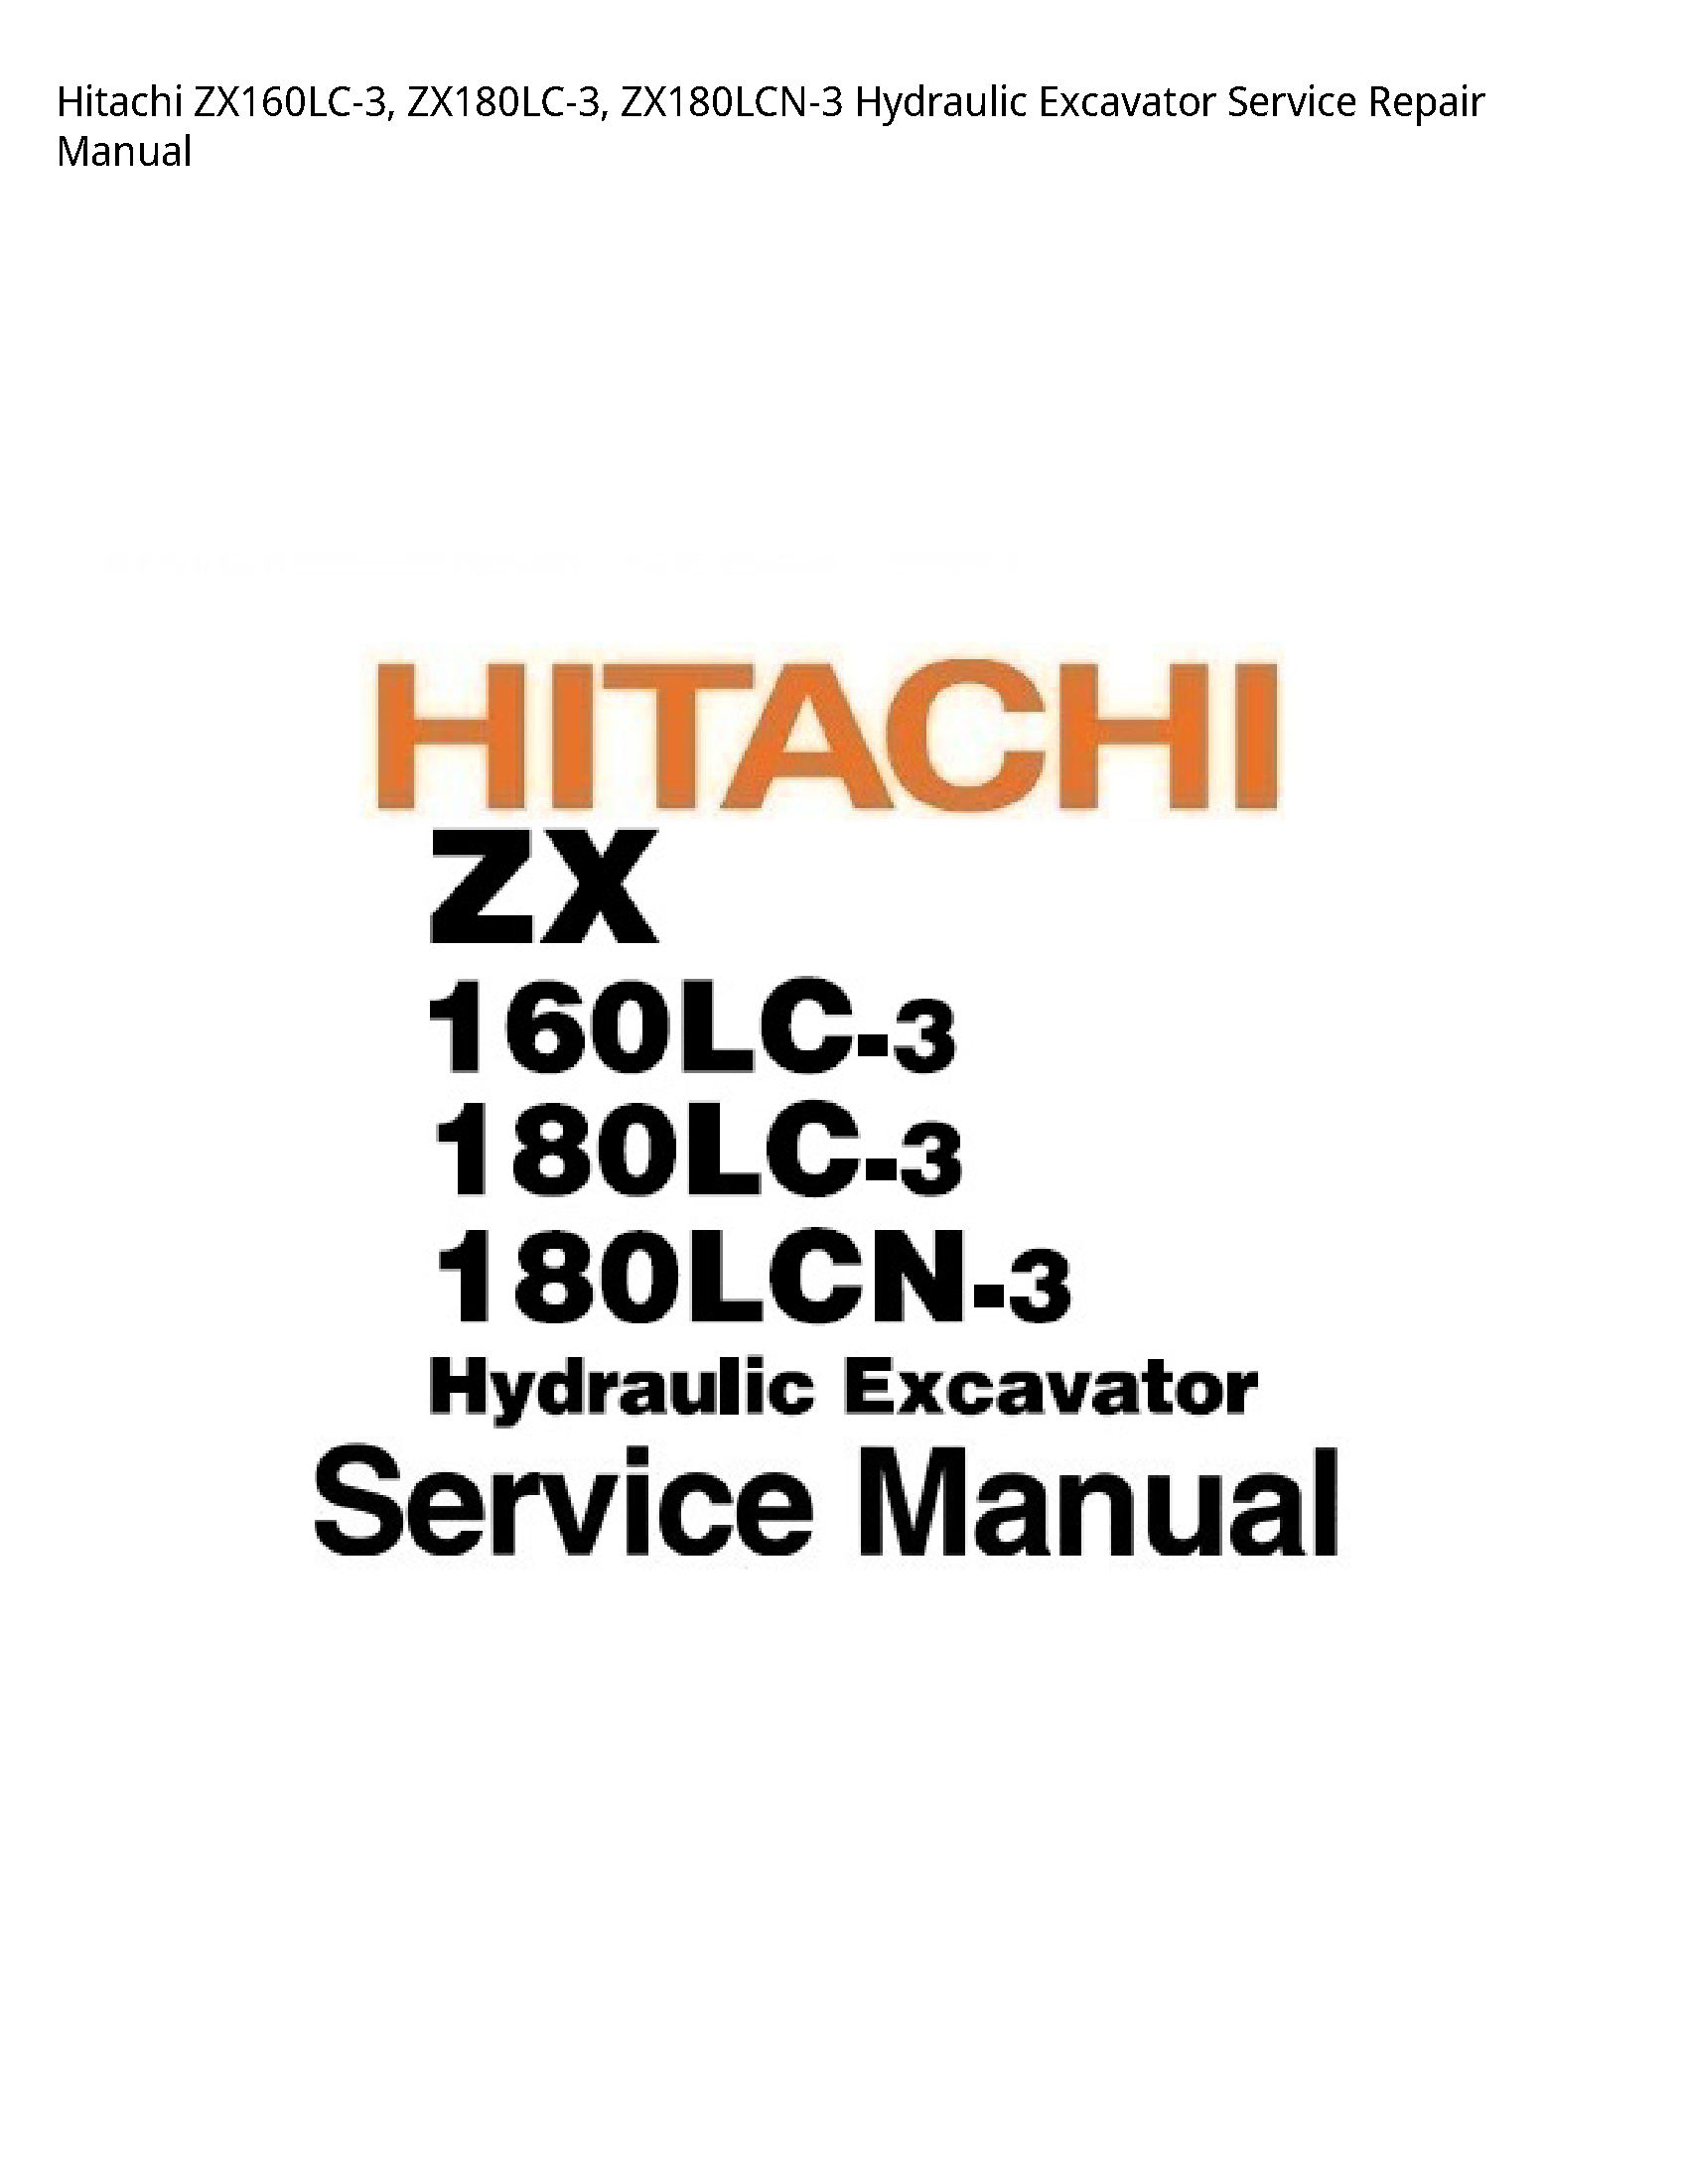 Hitachi ZX160LC-3 Hydraulic Excavator manual